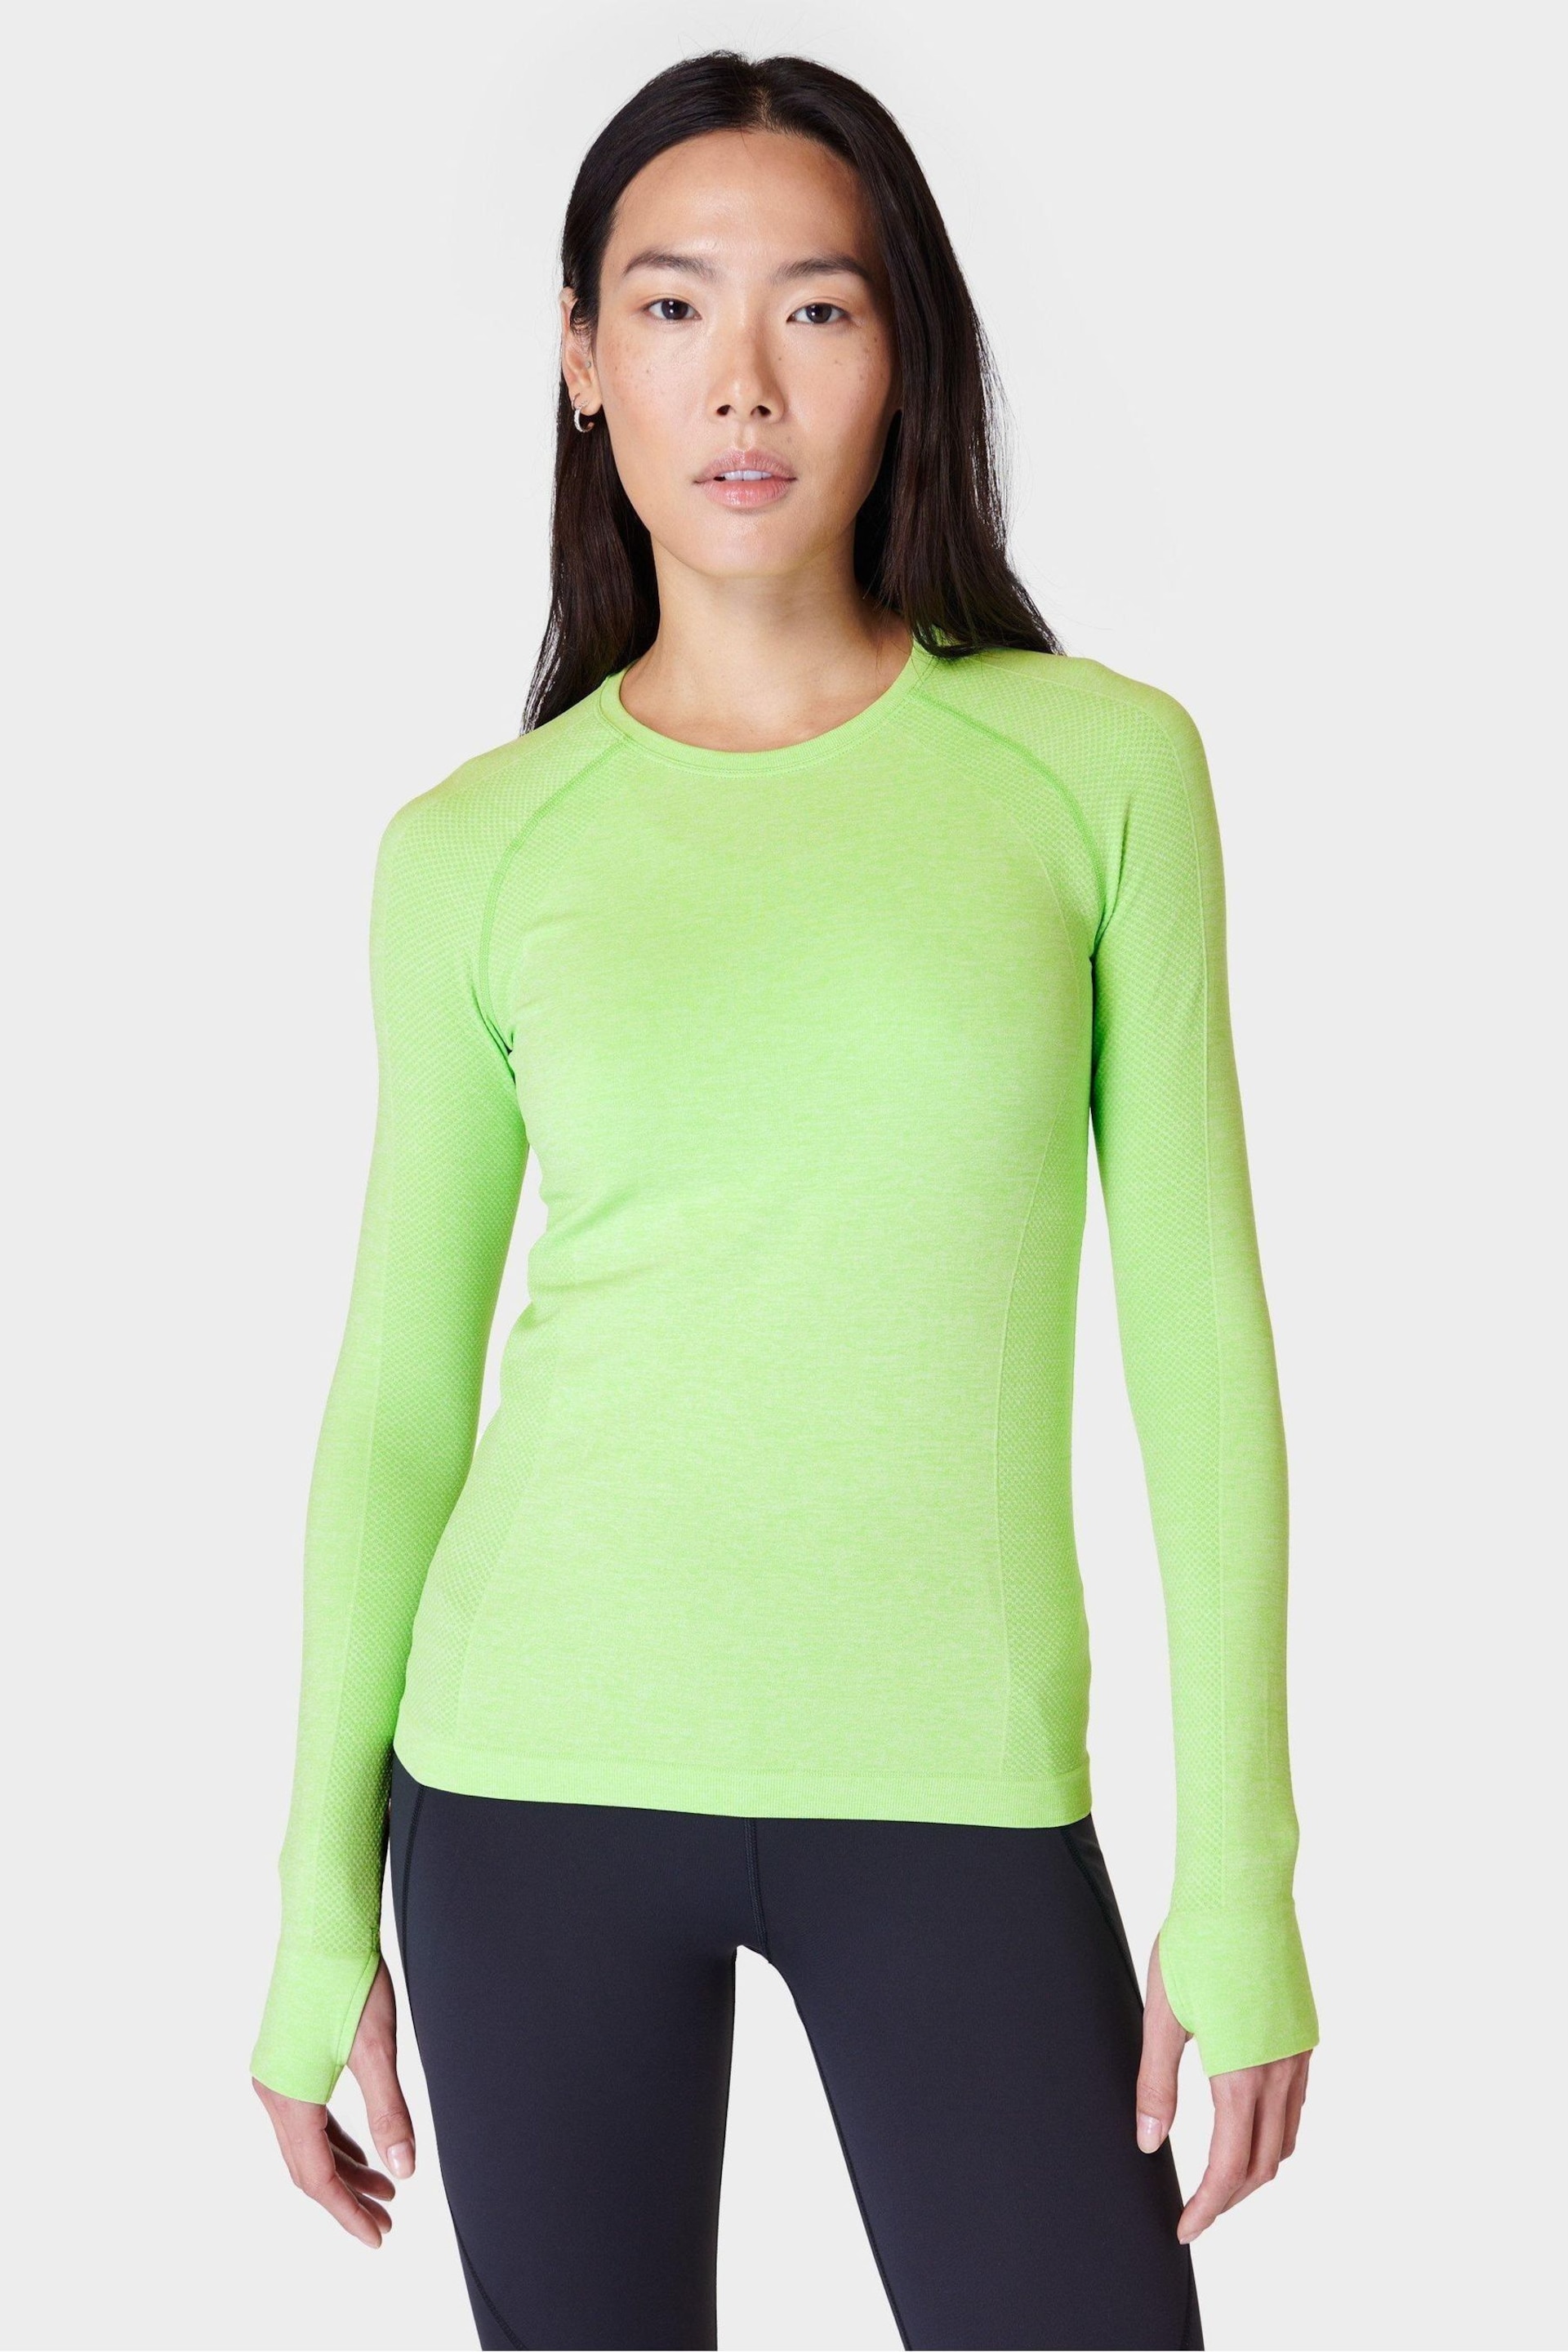 Sweaty Betty Zest Green Marl Athlete Seamless Workout Long Sleeve Top - Image 4 of 8